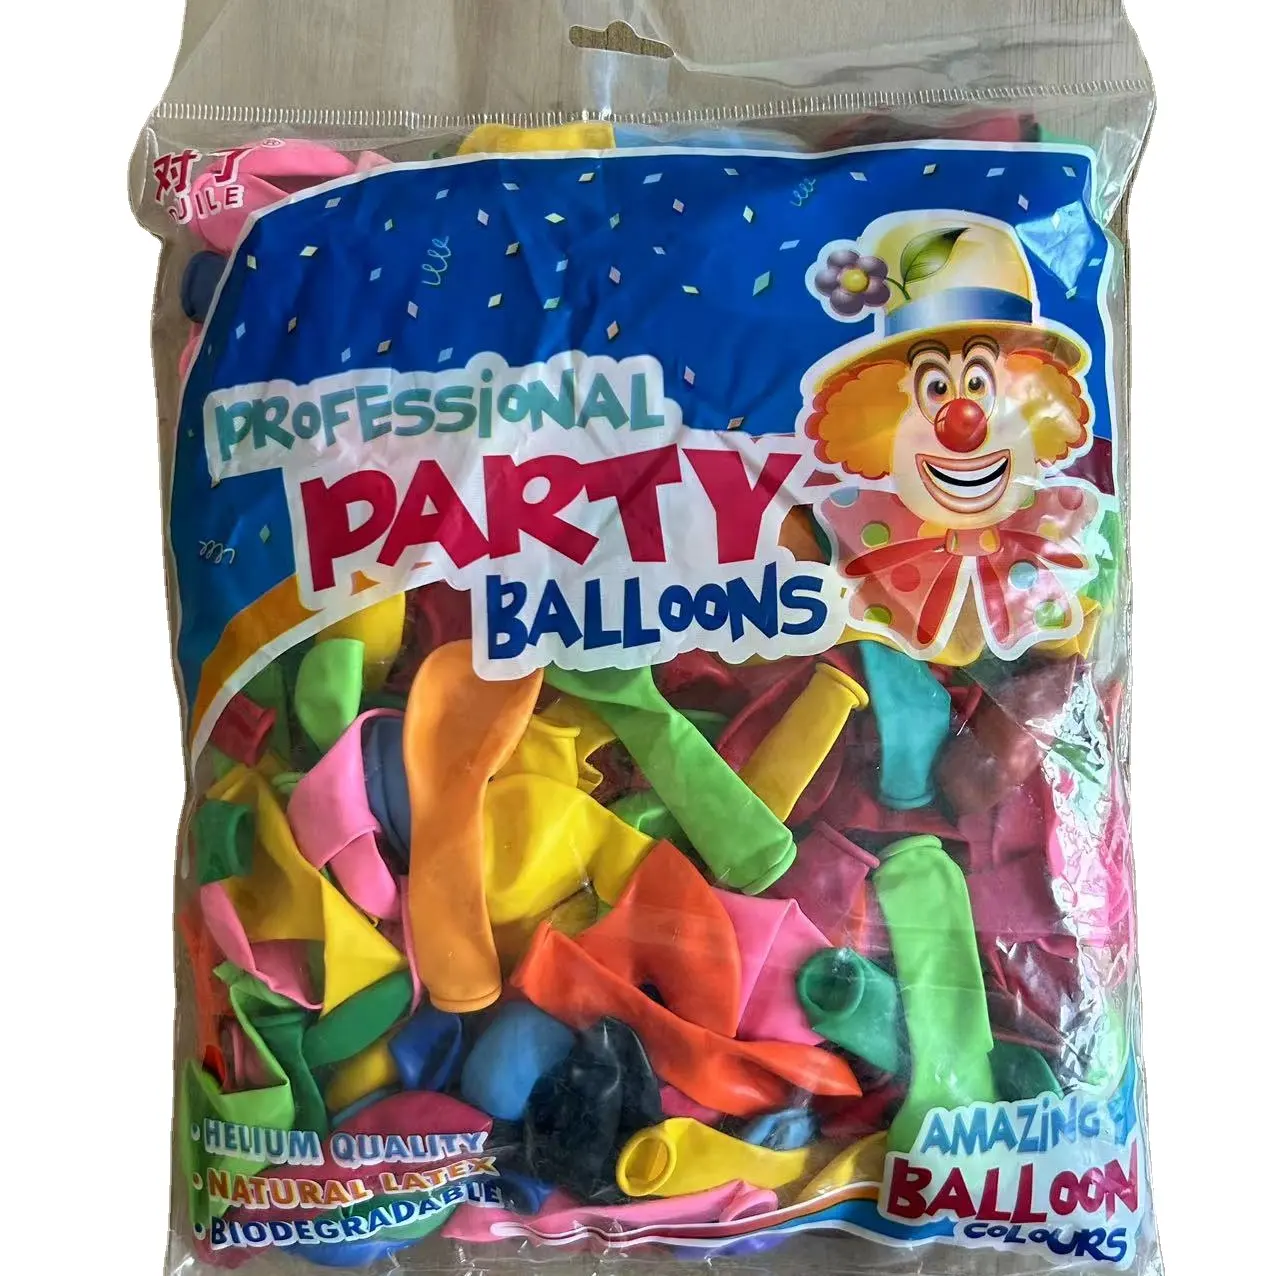 5 #1g शीर्ष गुणवत्ता 5 इंच 200 पीसी प्रति बैग लेटेक्स गुब्बारे मैट गुब्बारे मैट गुब्बारे